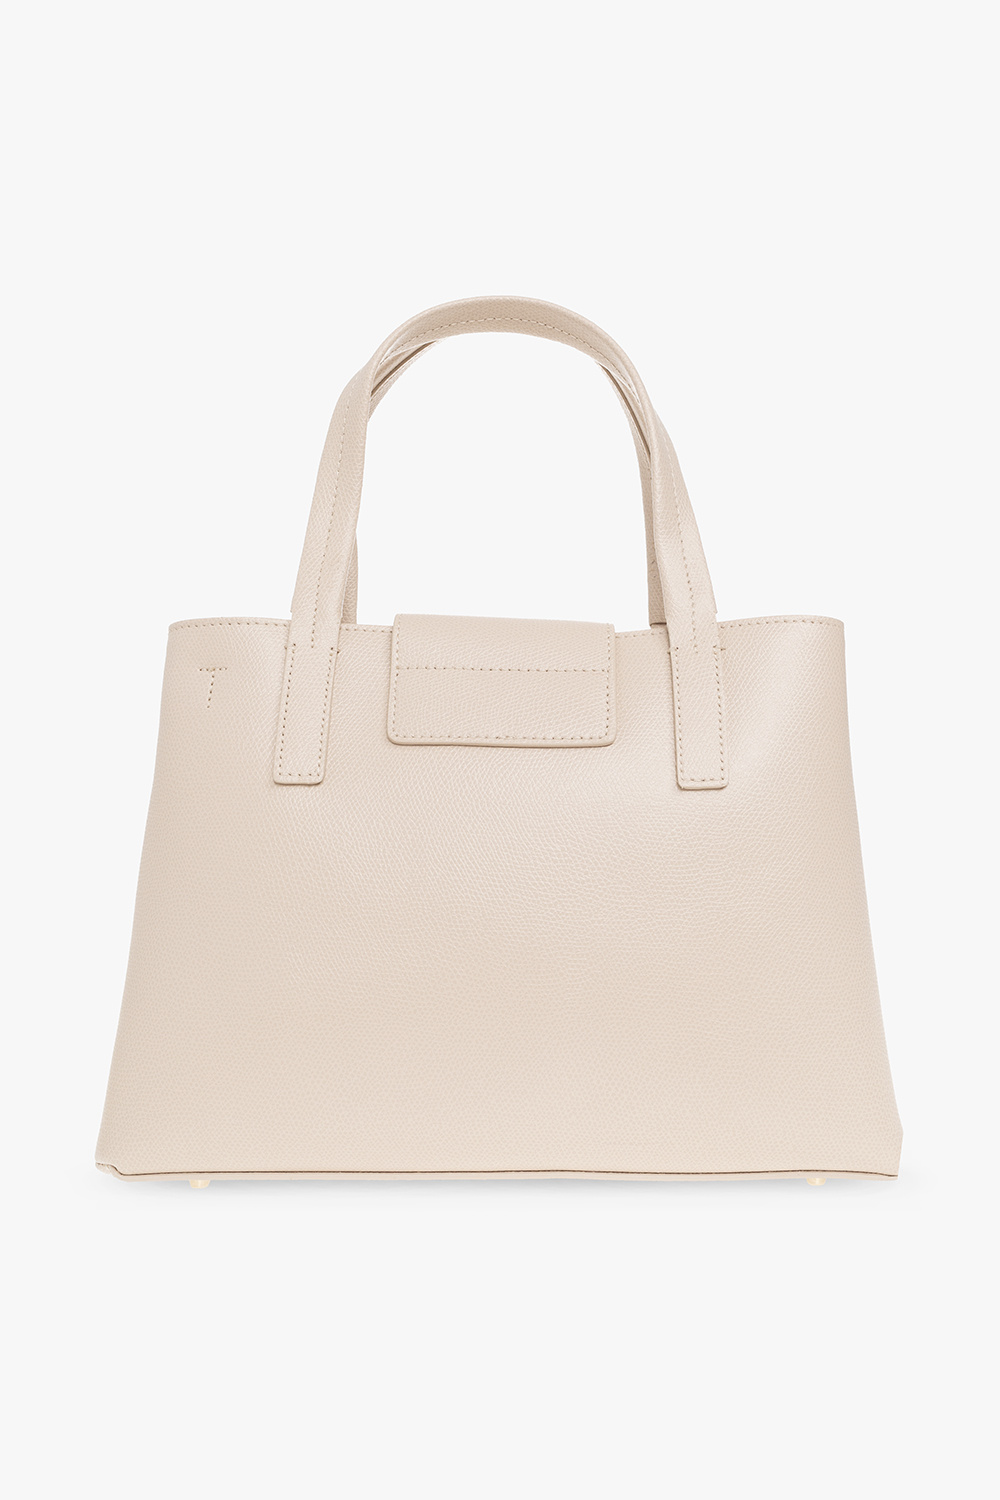 Furla ‘1927’ shoulder bag